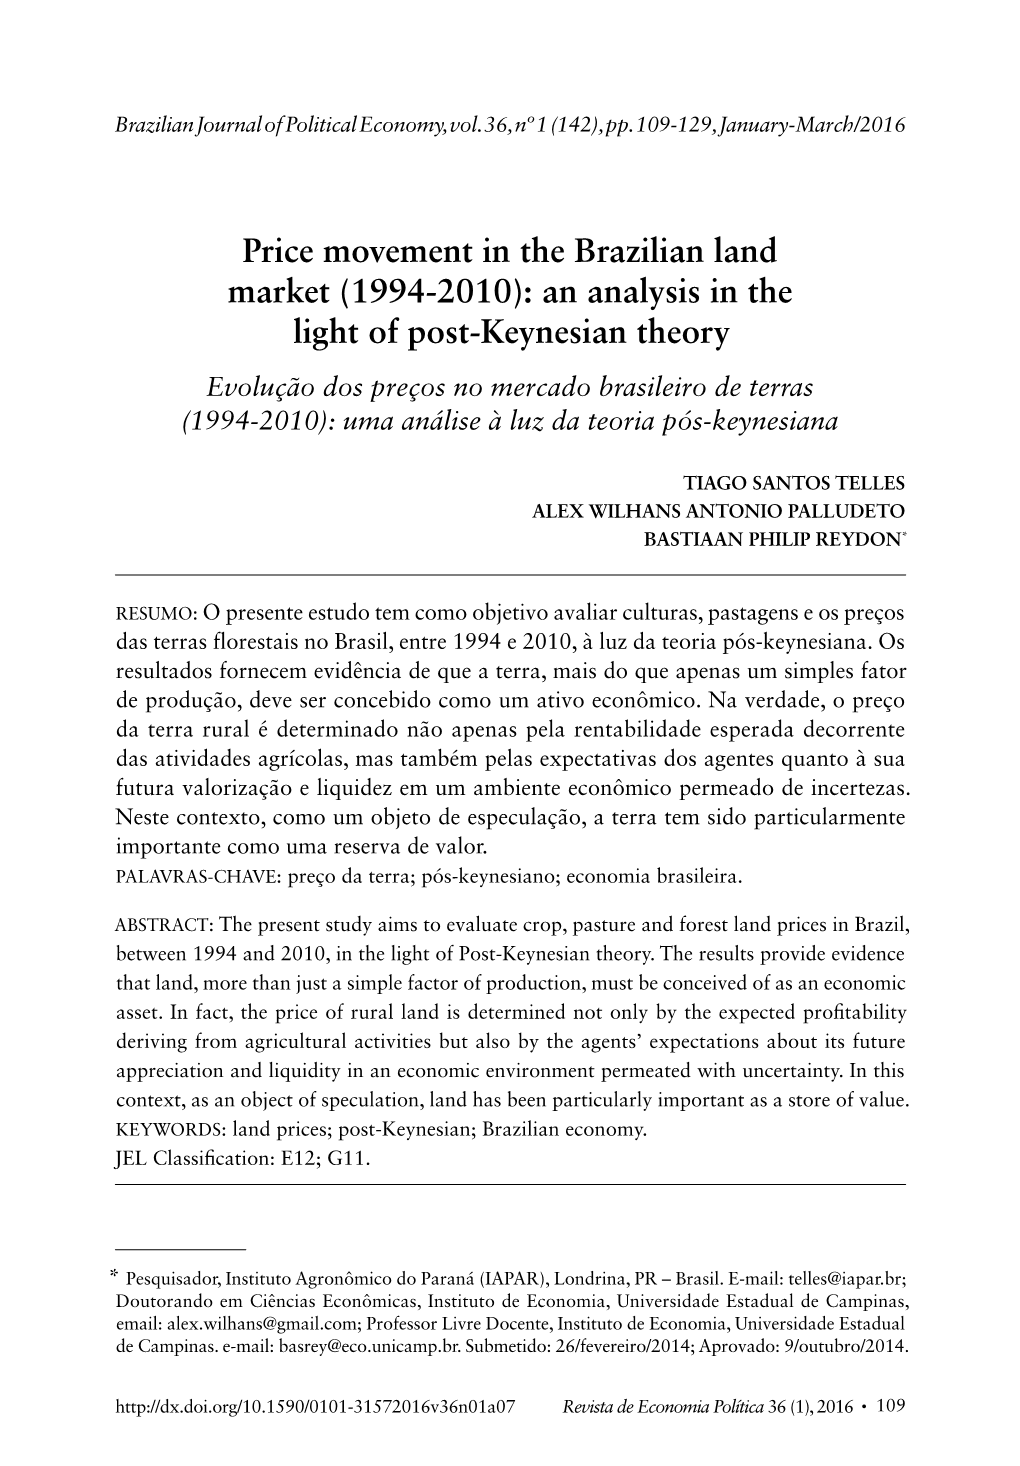 Price Movement in the Brazilian Land Market (1994-2010)